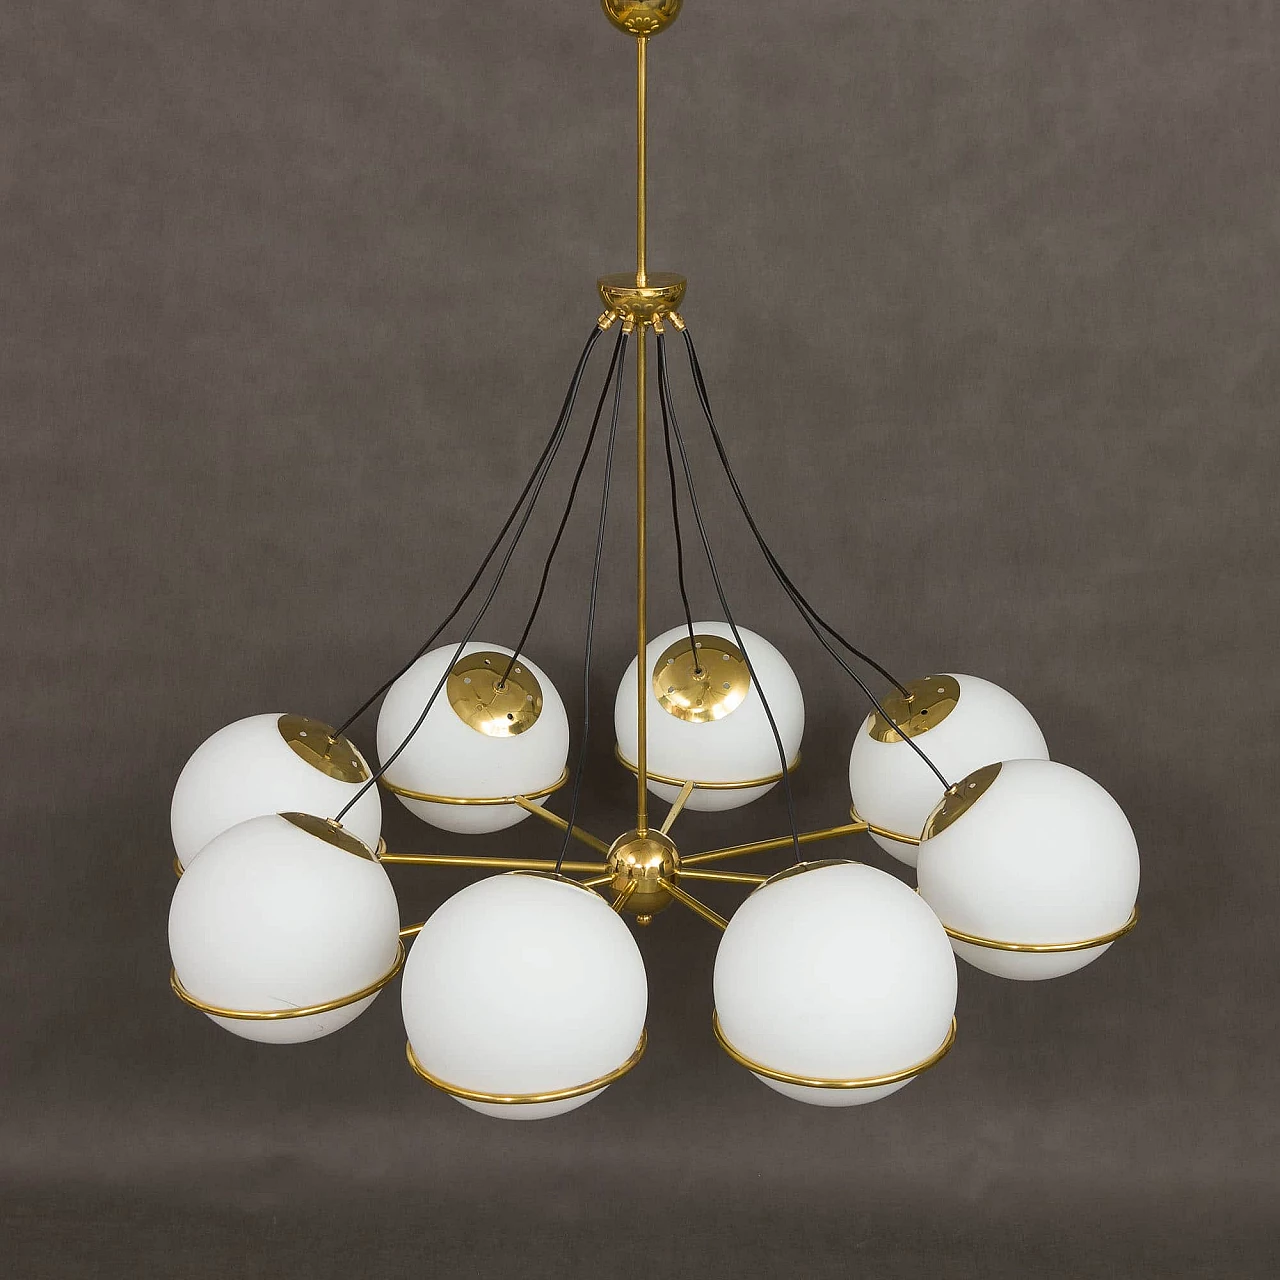 Brass chandelier in the Gino Sarfatti style with 8 opaline glass globes, 1970s 1376219